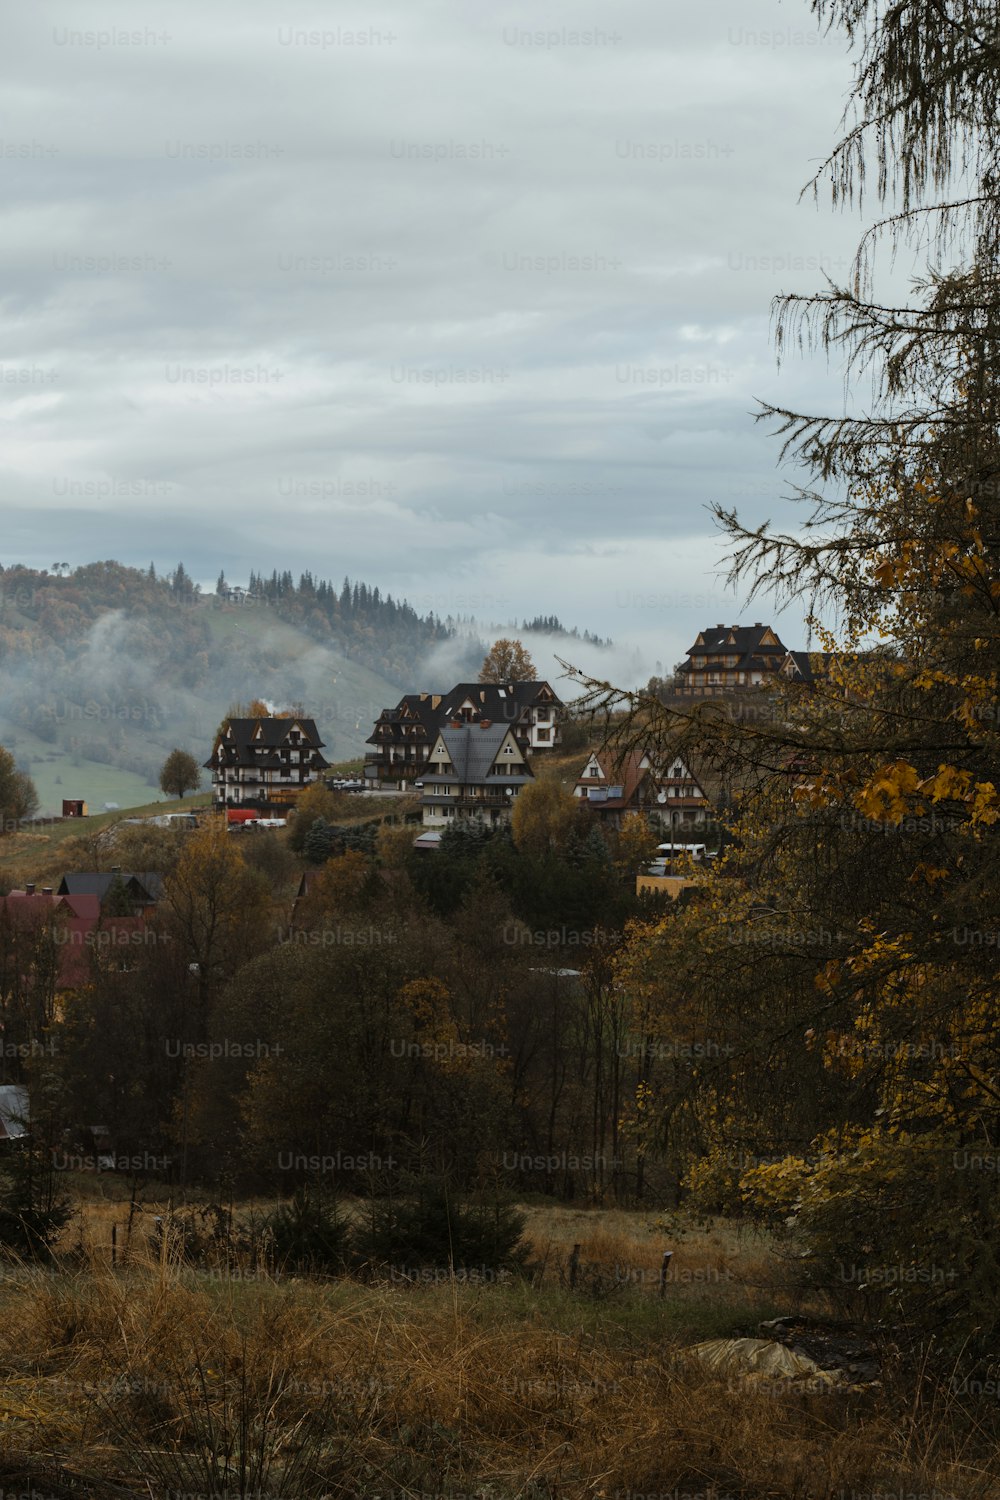 Una veduta di una piccola città tra le montagne